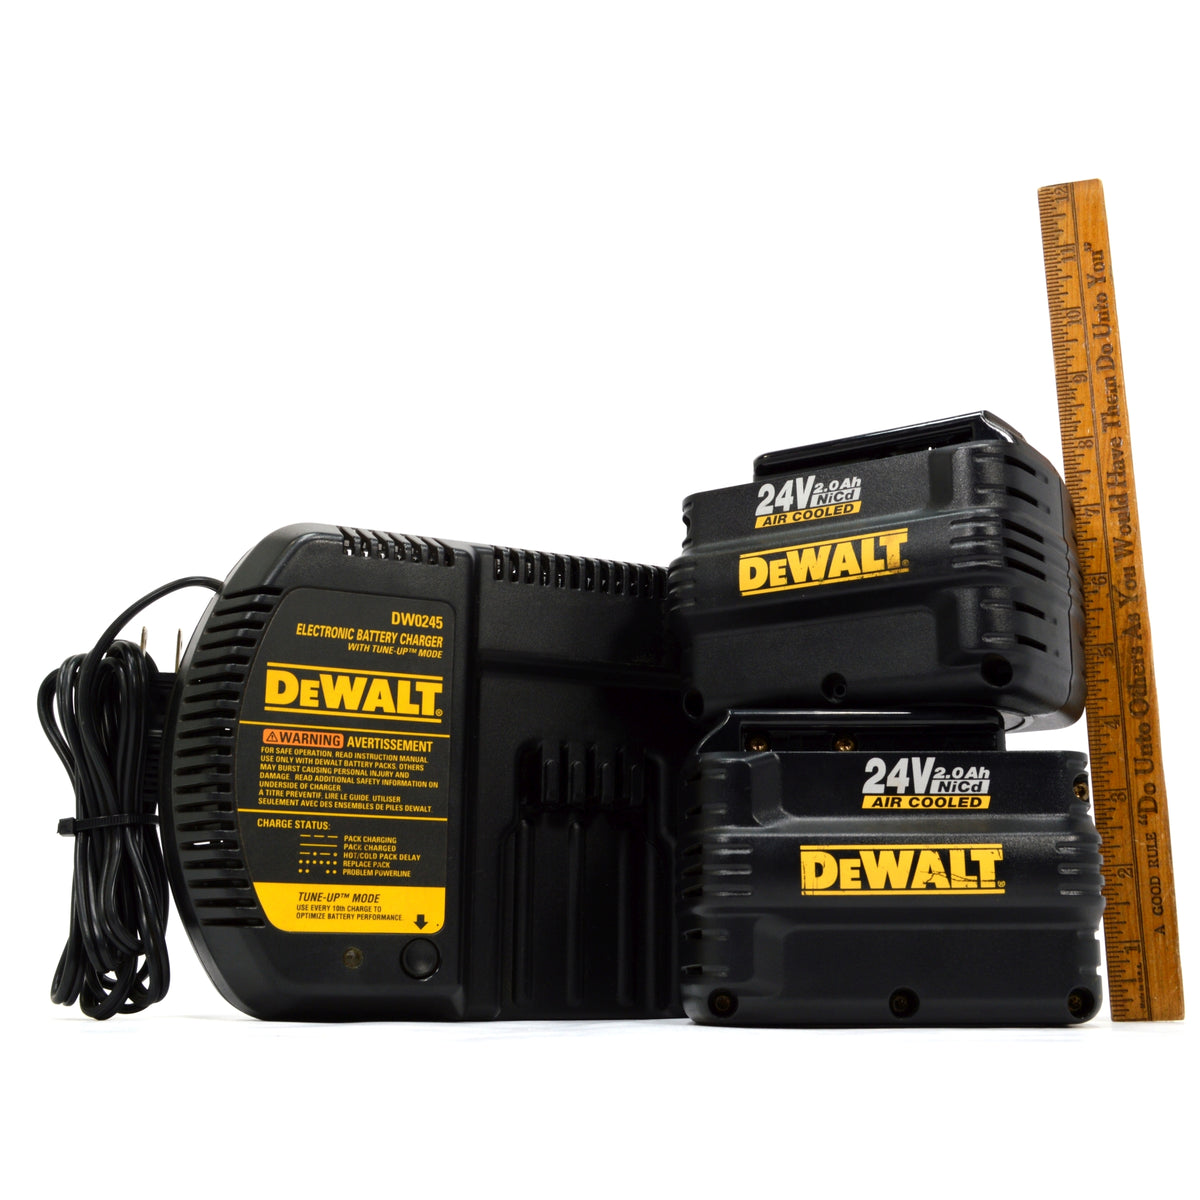 DeWalt New Genuine DW0245 24V Battery Charger for DW0240 DW0242 DW0246  Stryker